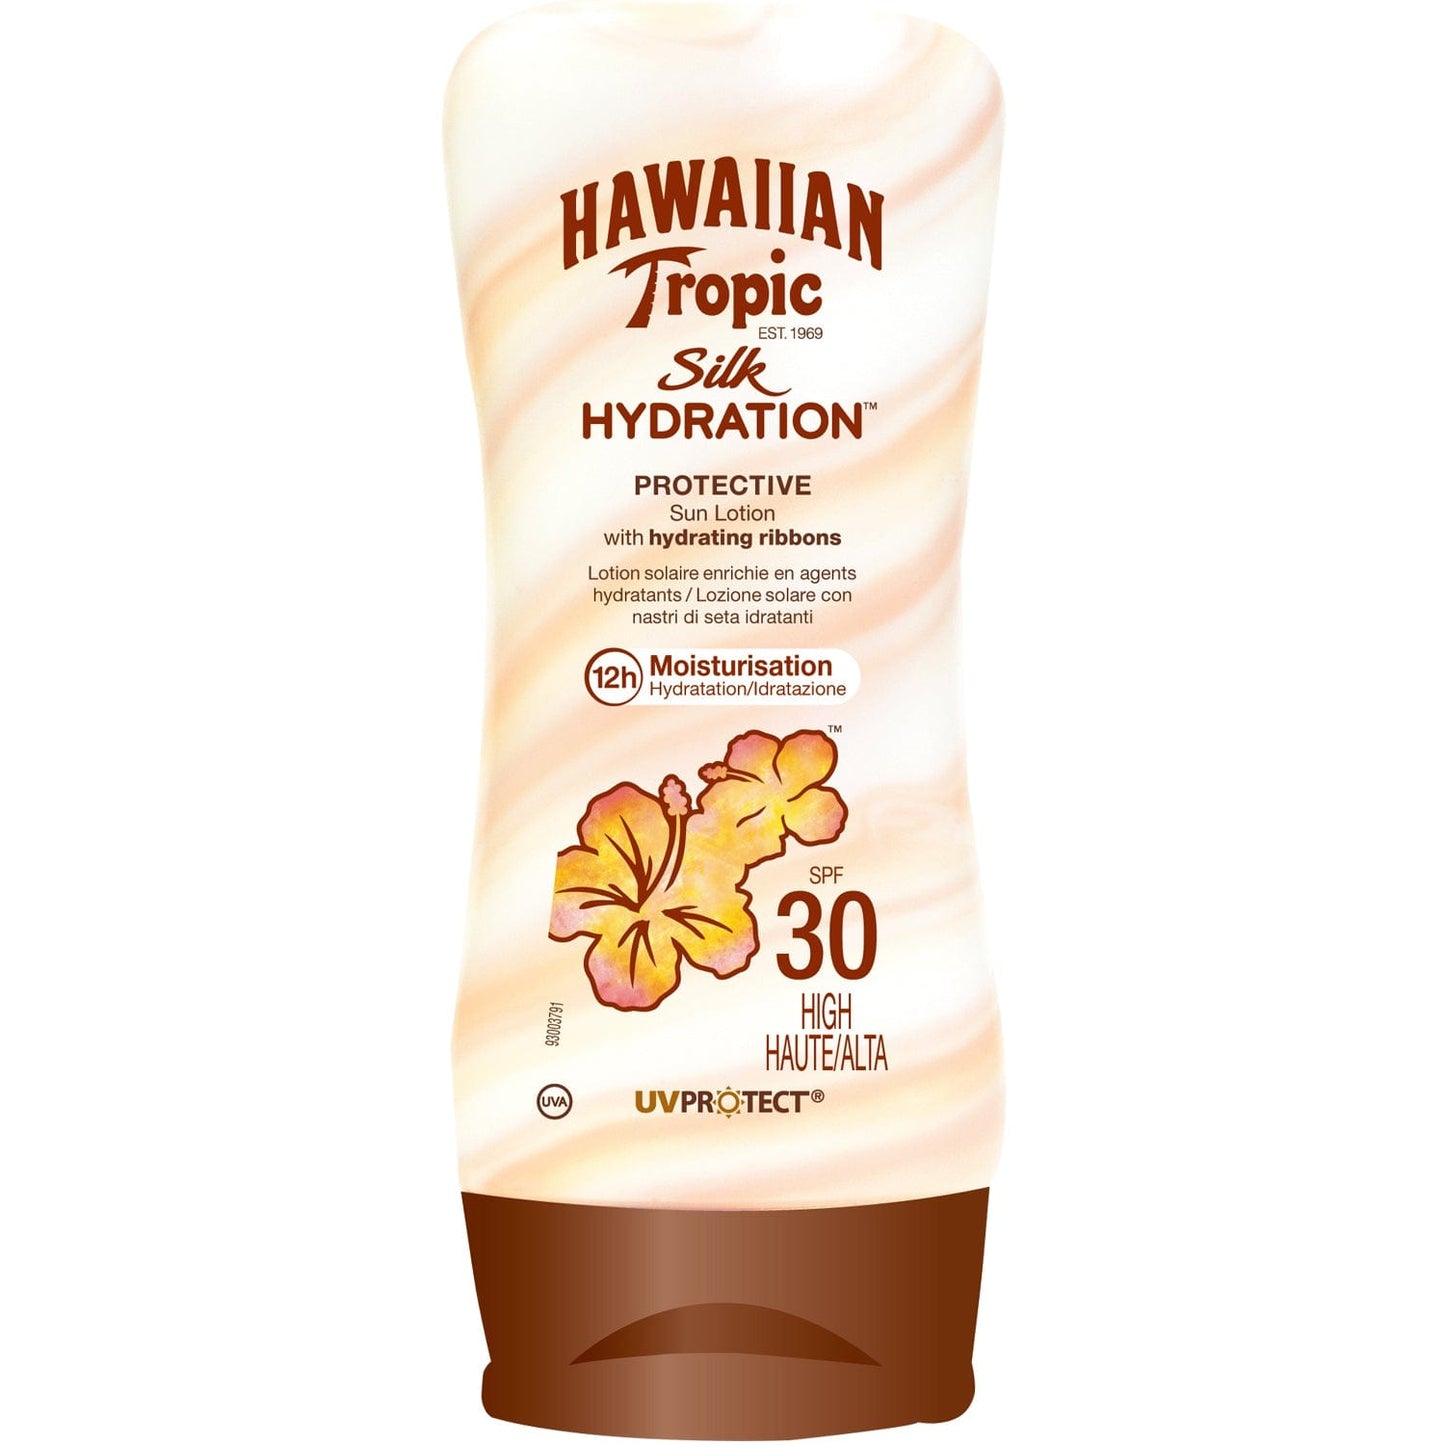 Hawaiian Tropic - Lotion protectrice hydratante SPF 30 - Silk hydration - 180ml - Hawaiian Tropic - Ethni Beauty Market